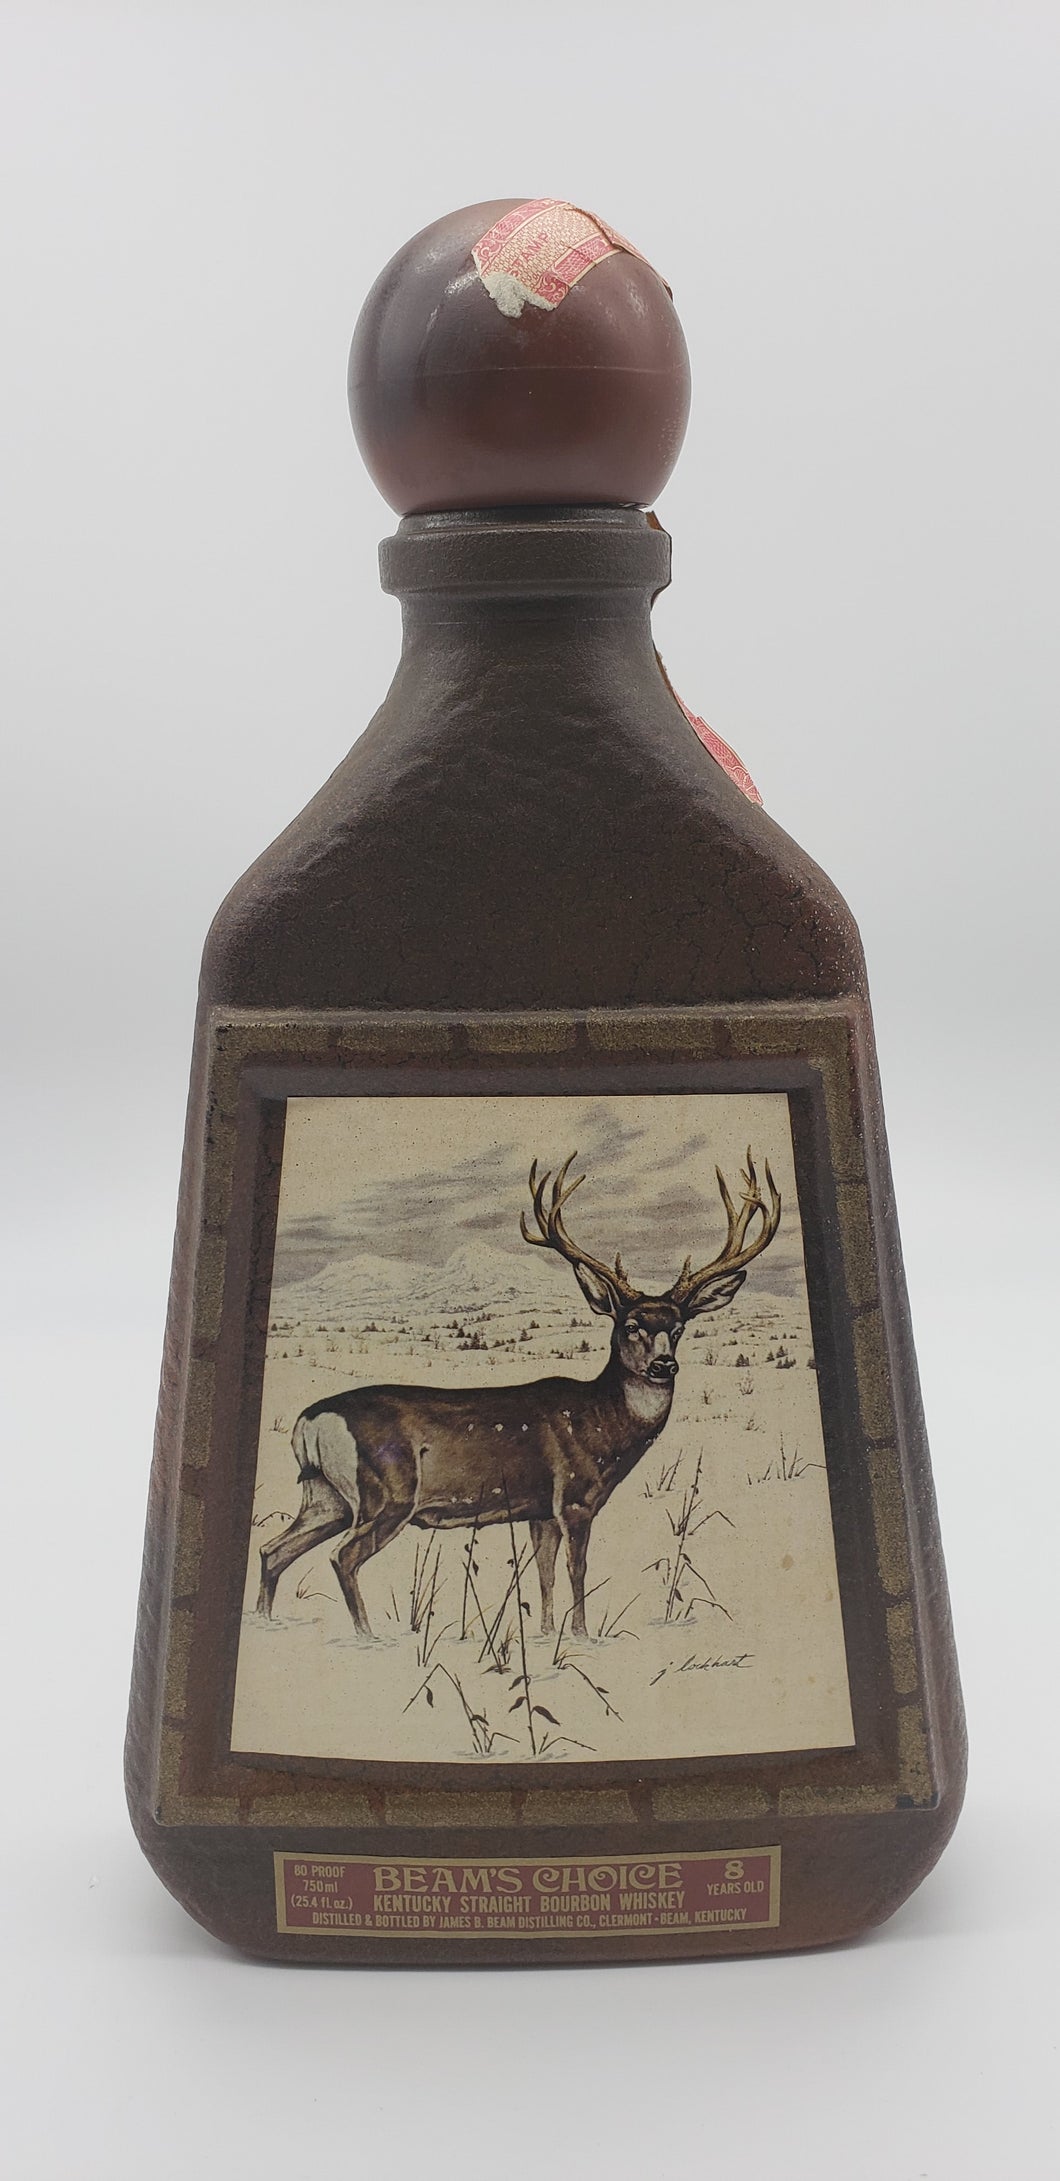 Jim Beam Beam's Choice Vintage Mule Deer Decanter Bottle James Lockhart (Empty)